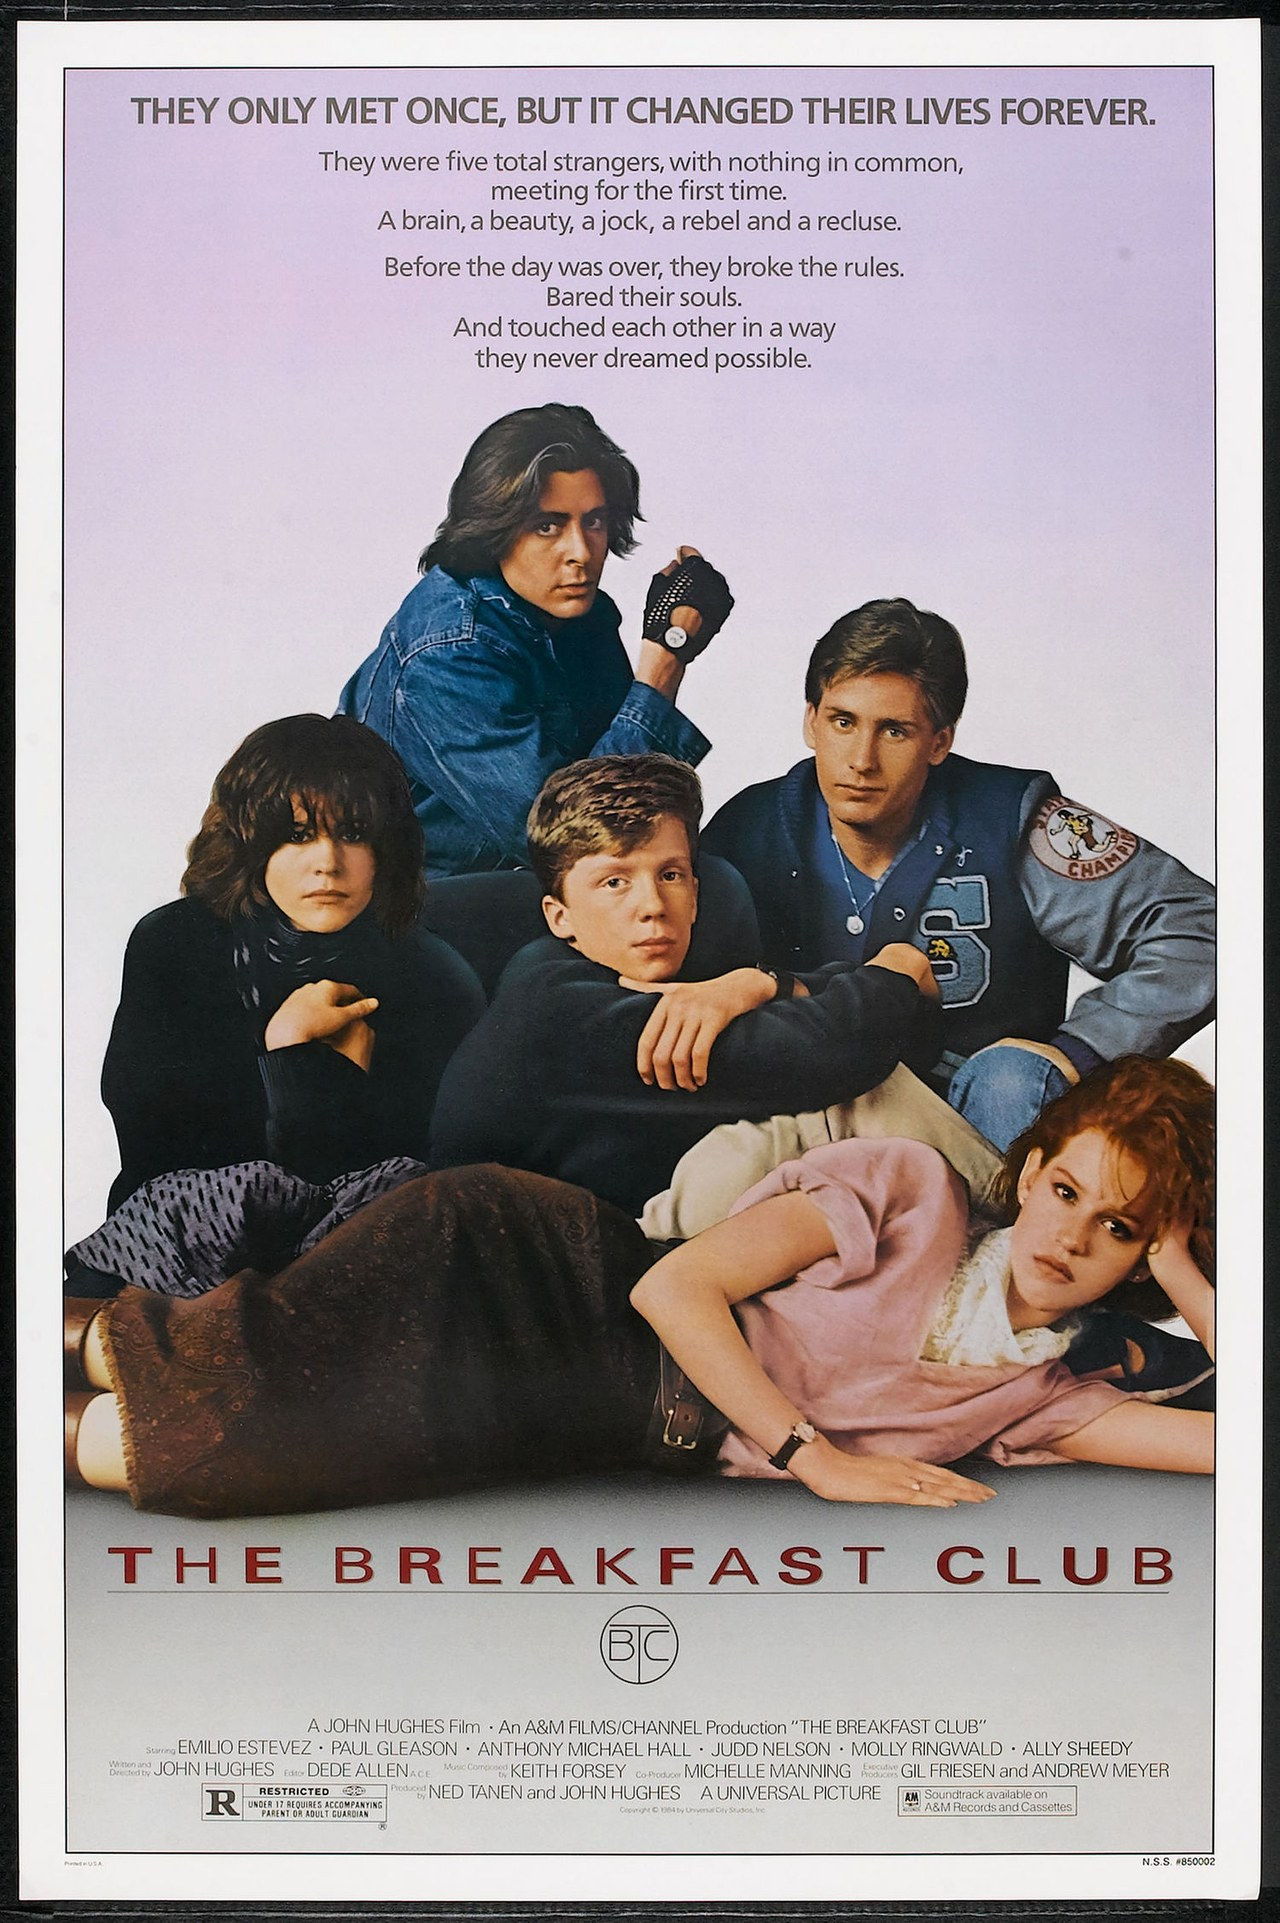 该 breakfast club